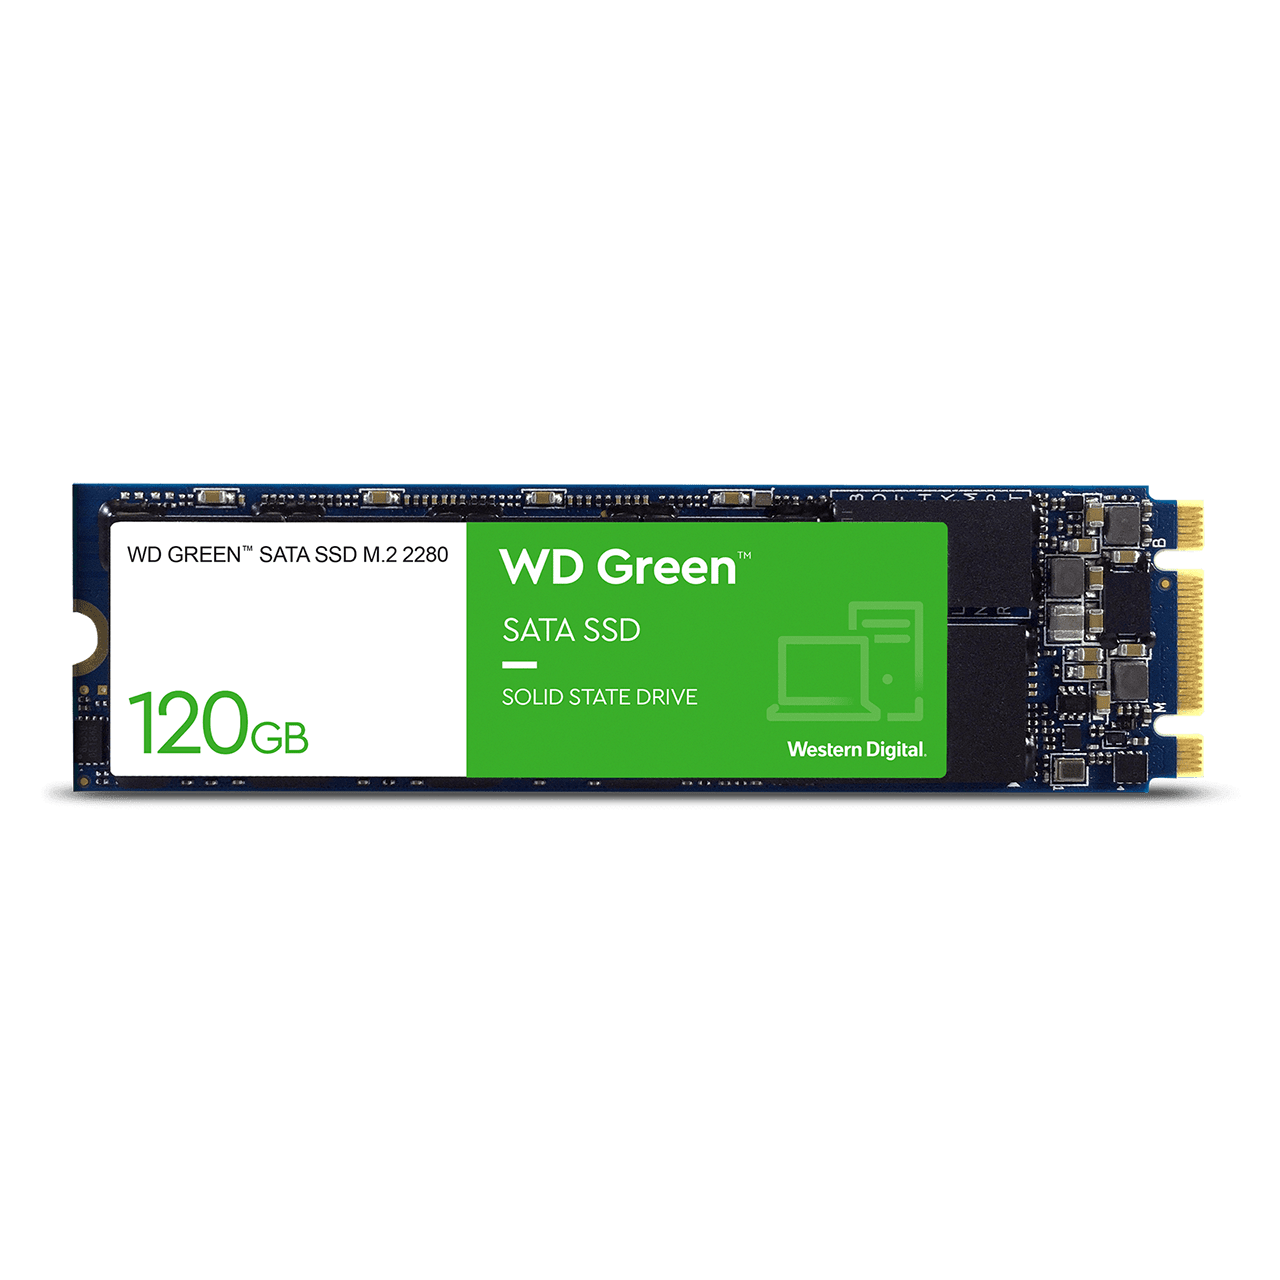 WD Green SSD M.2 2280 120GB - Image1